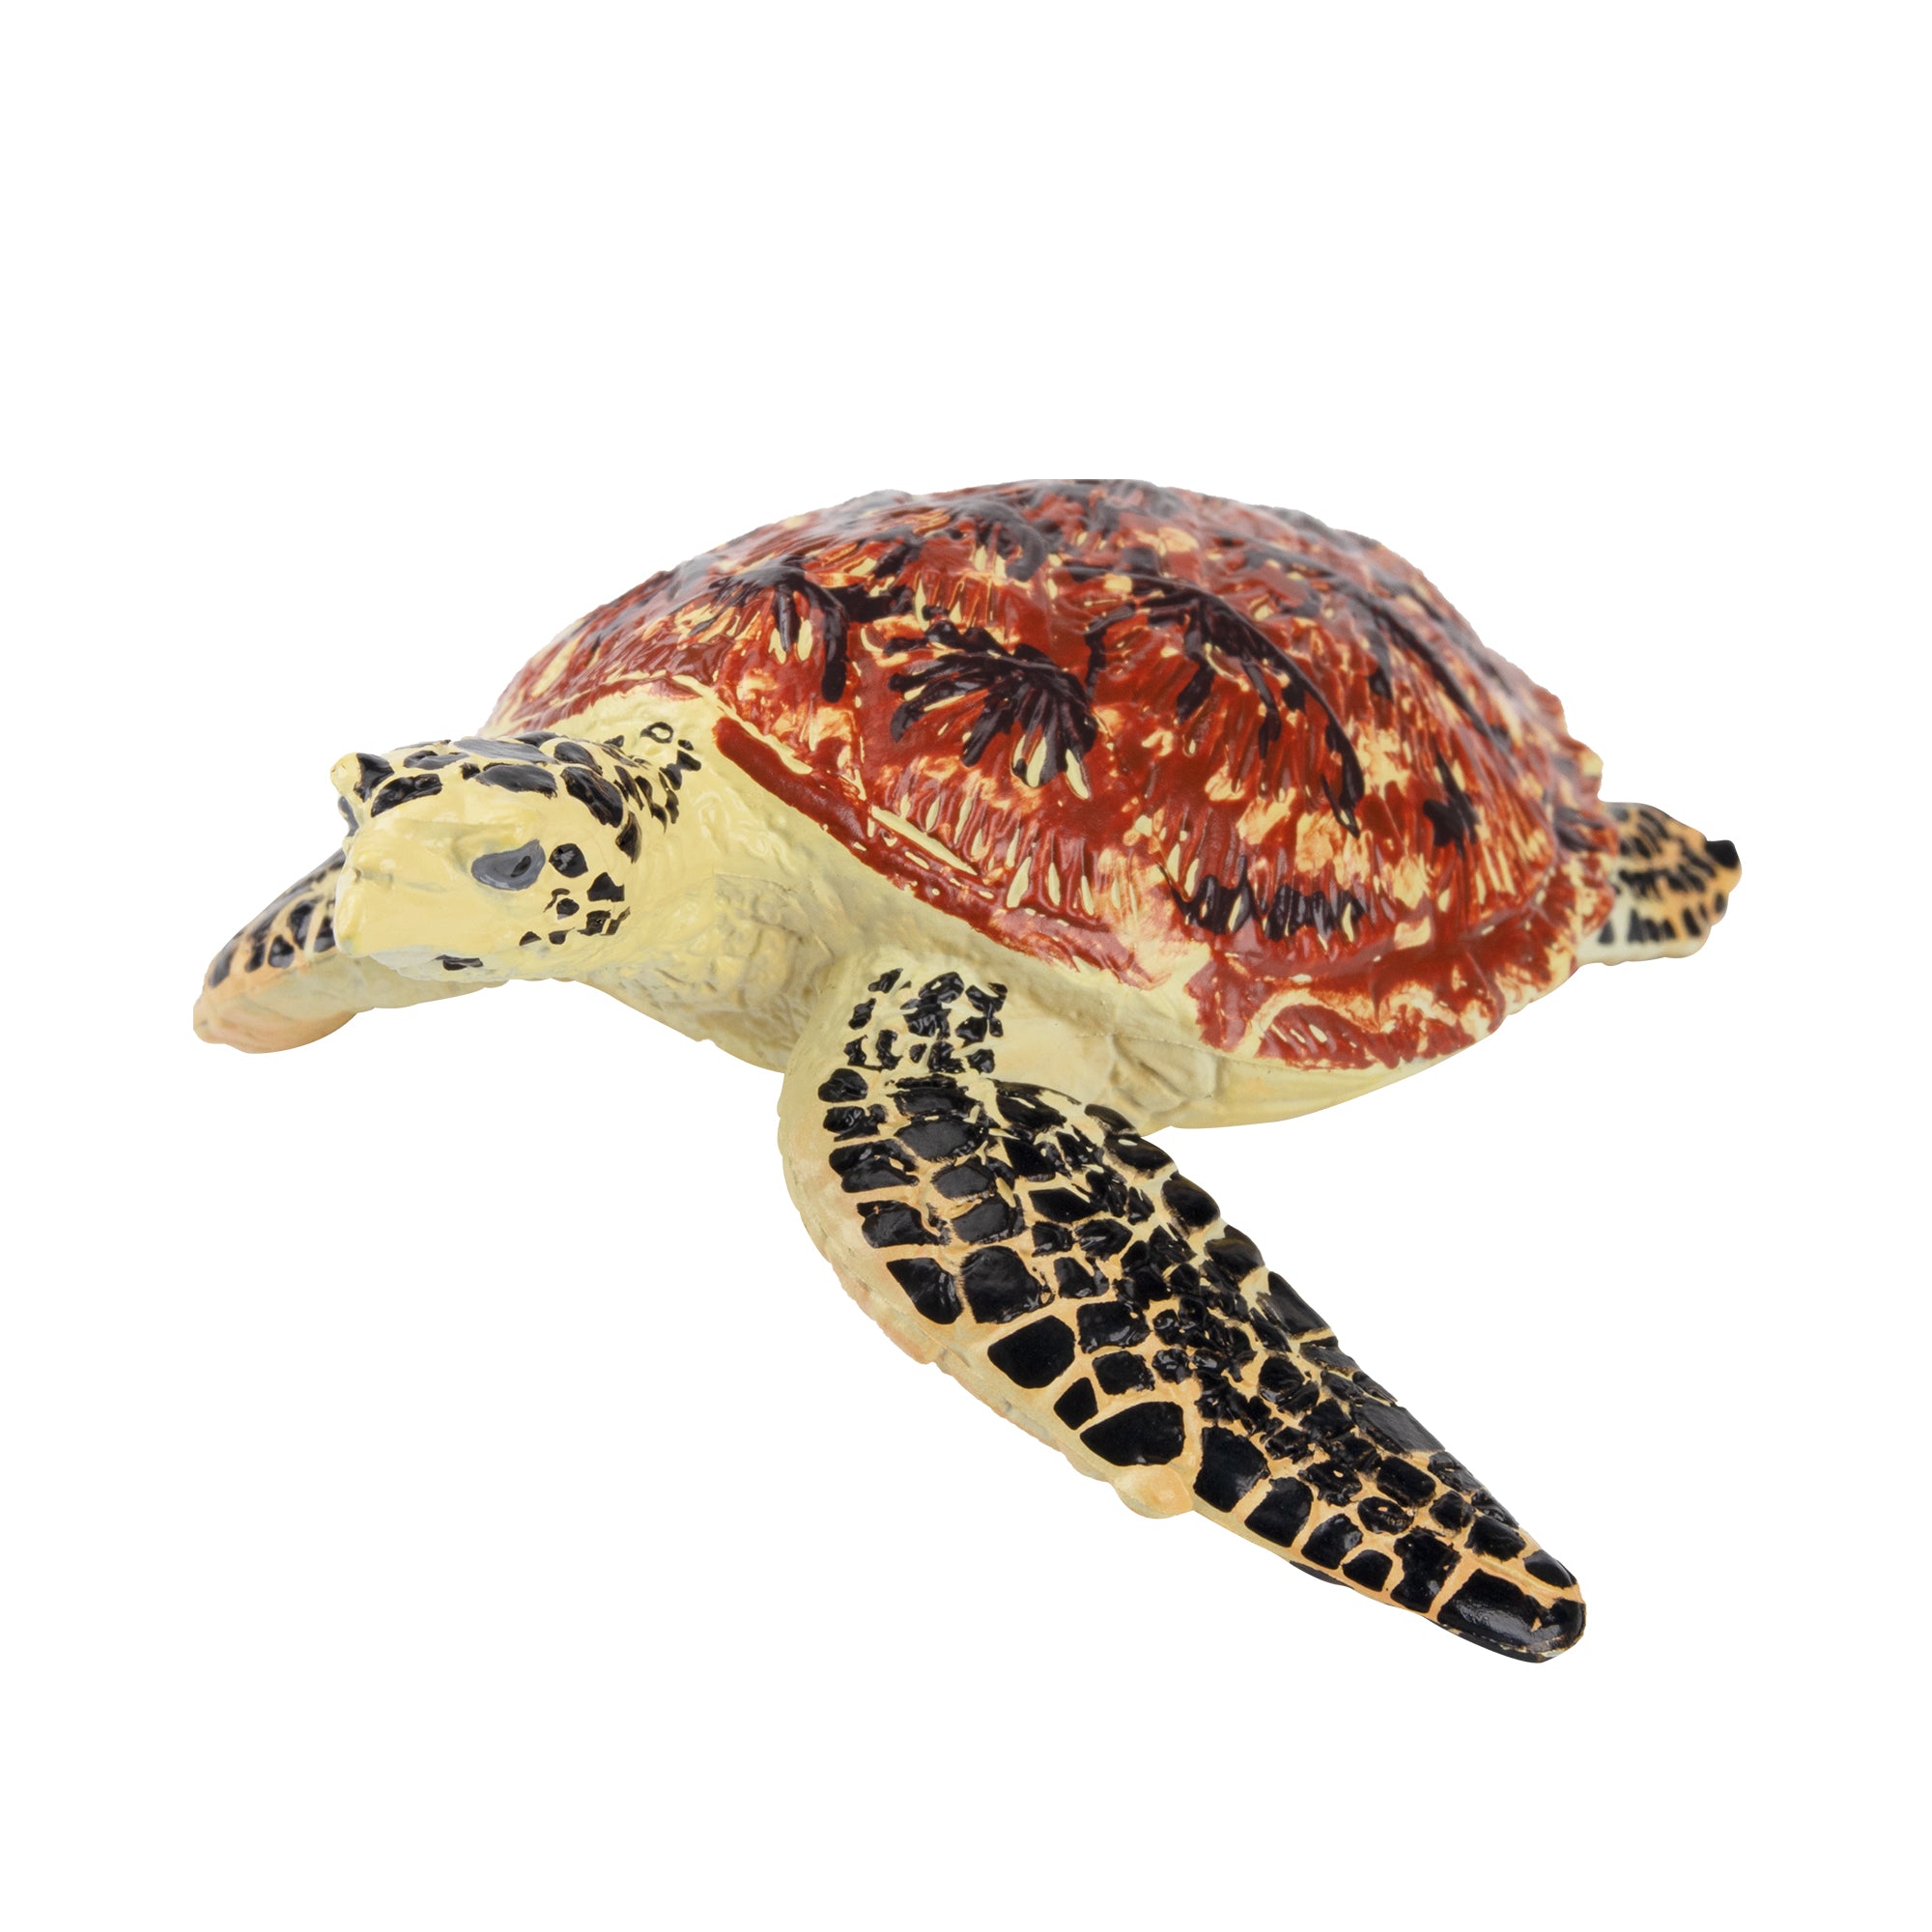 Toymany Walking Sea Turtle Figurine Toy